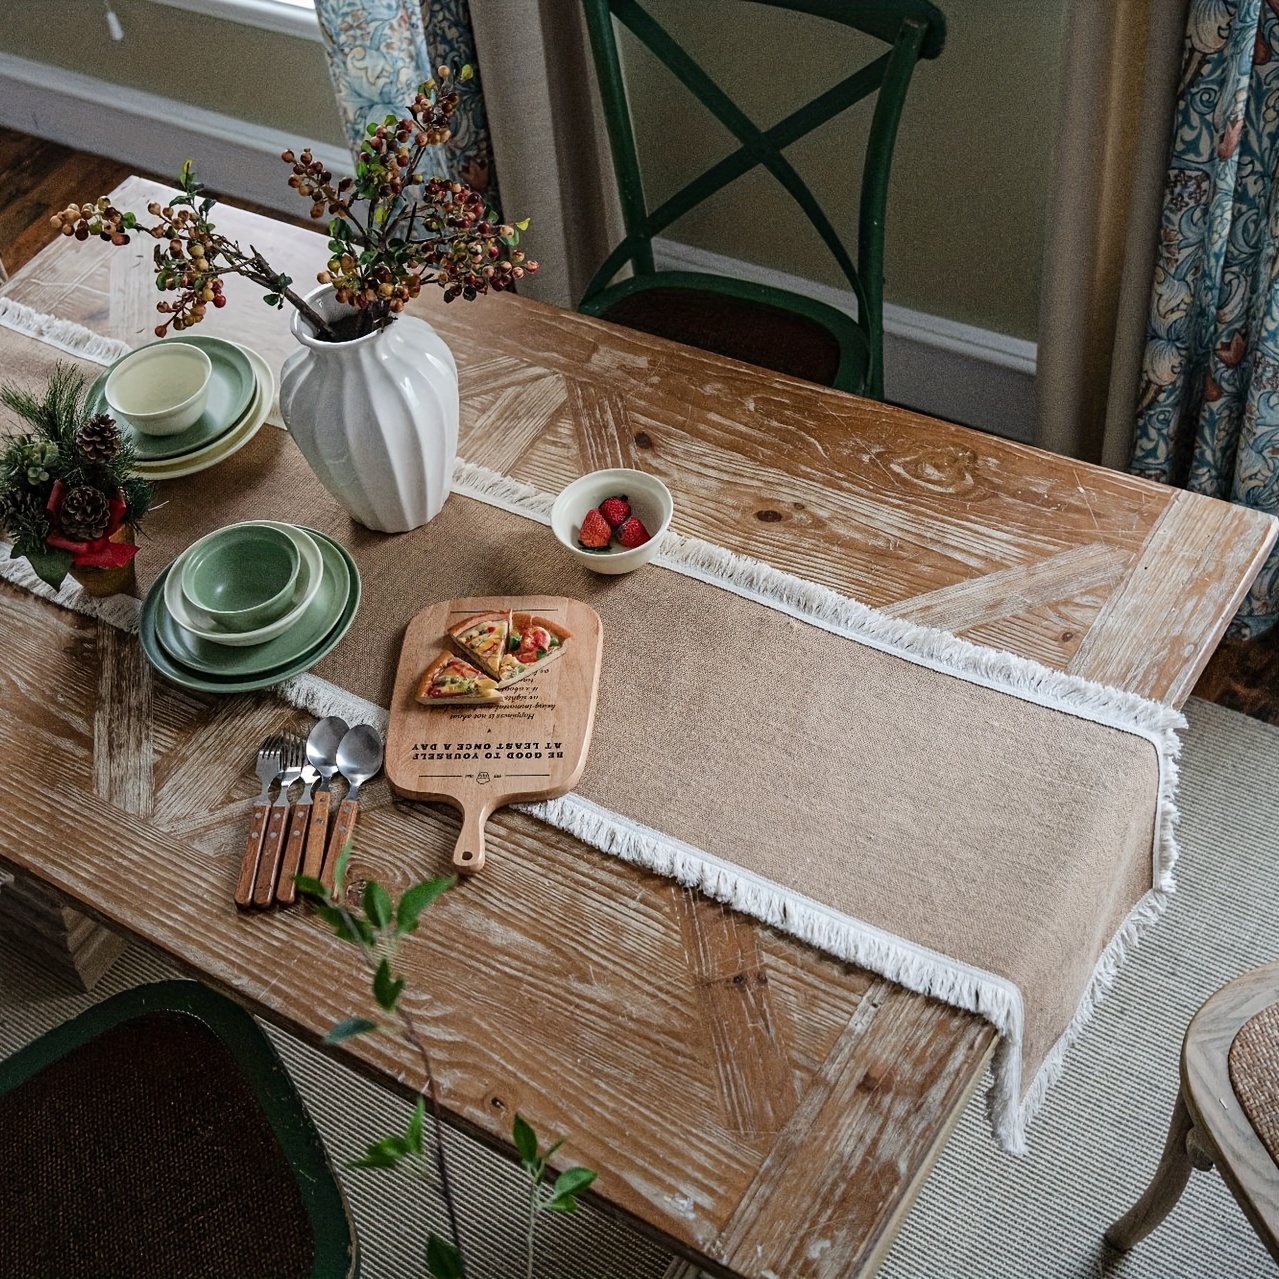 tiosggd Burlap Table Runner 2 Packs 14 inchx72 inch Jute Linen Farmhouse Rustic Tablecloth for Christmas Thanksgiving Day Easter Supplies Weddings